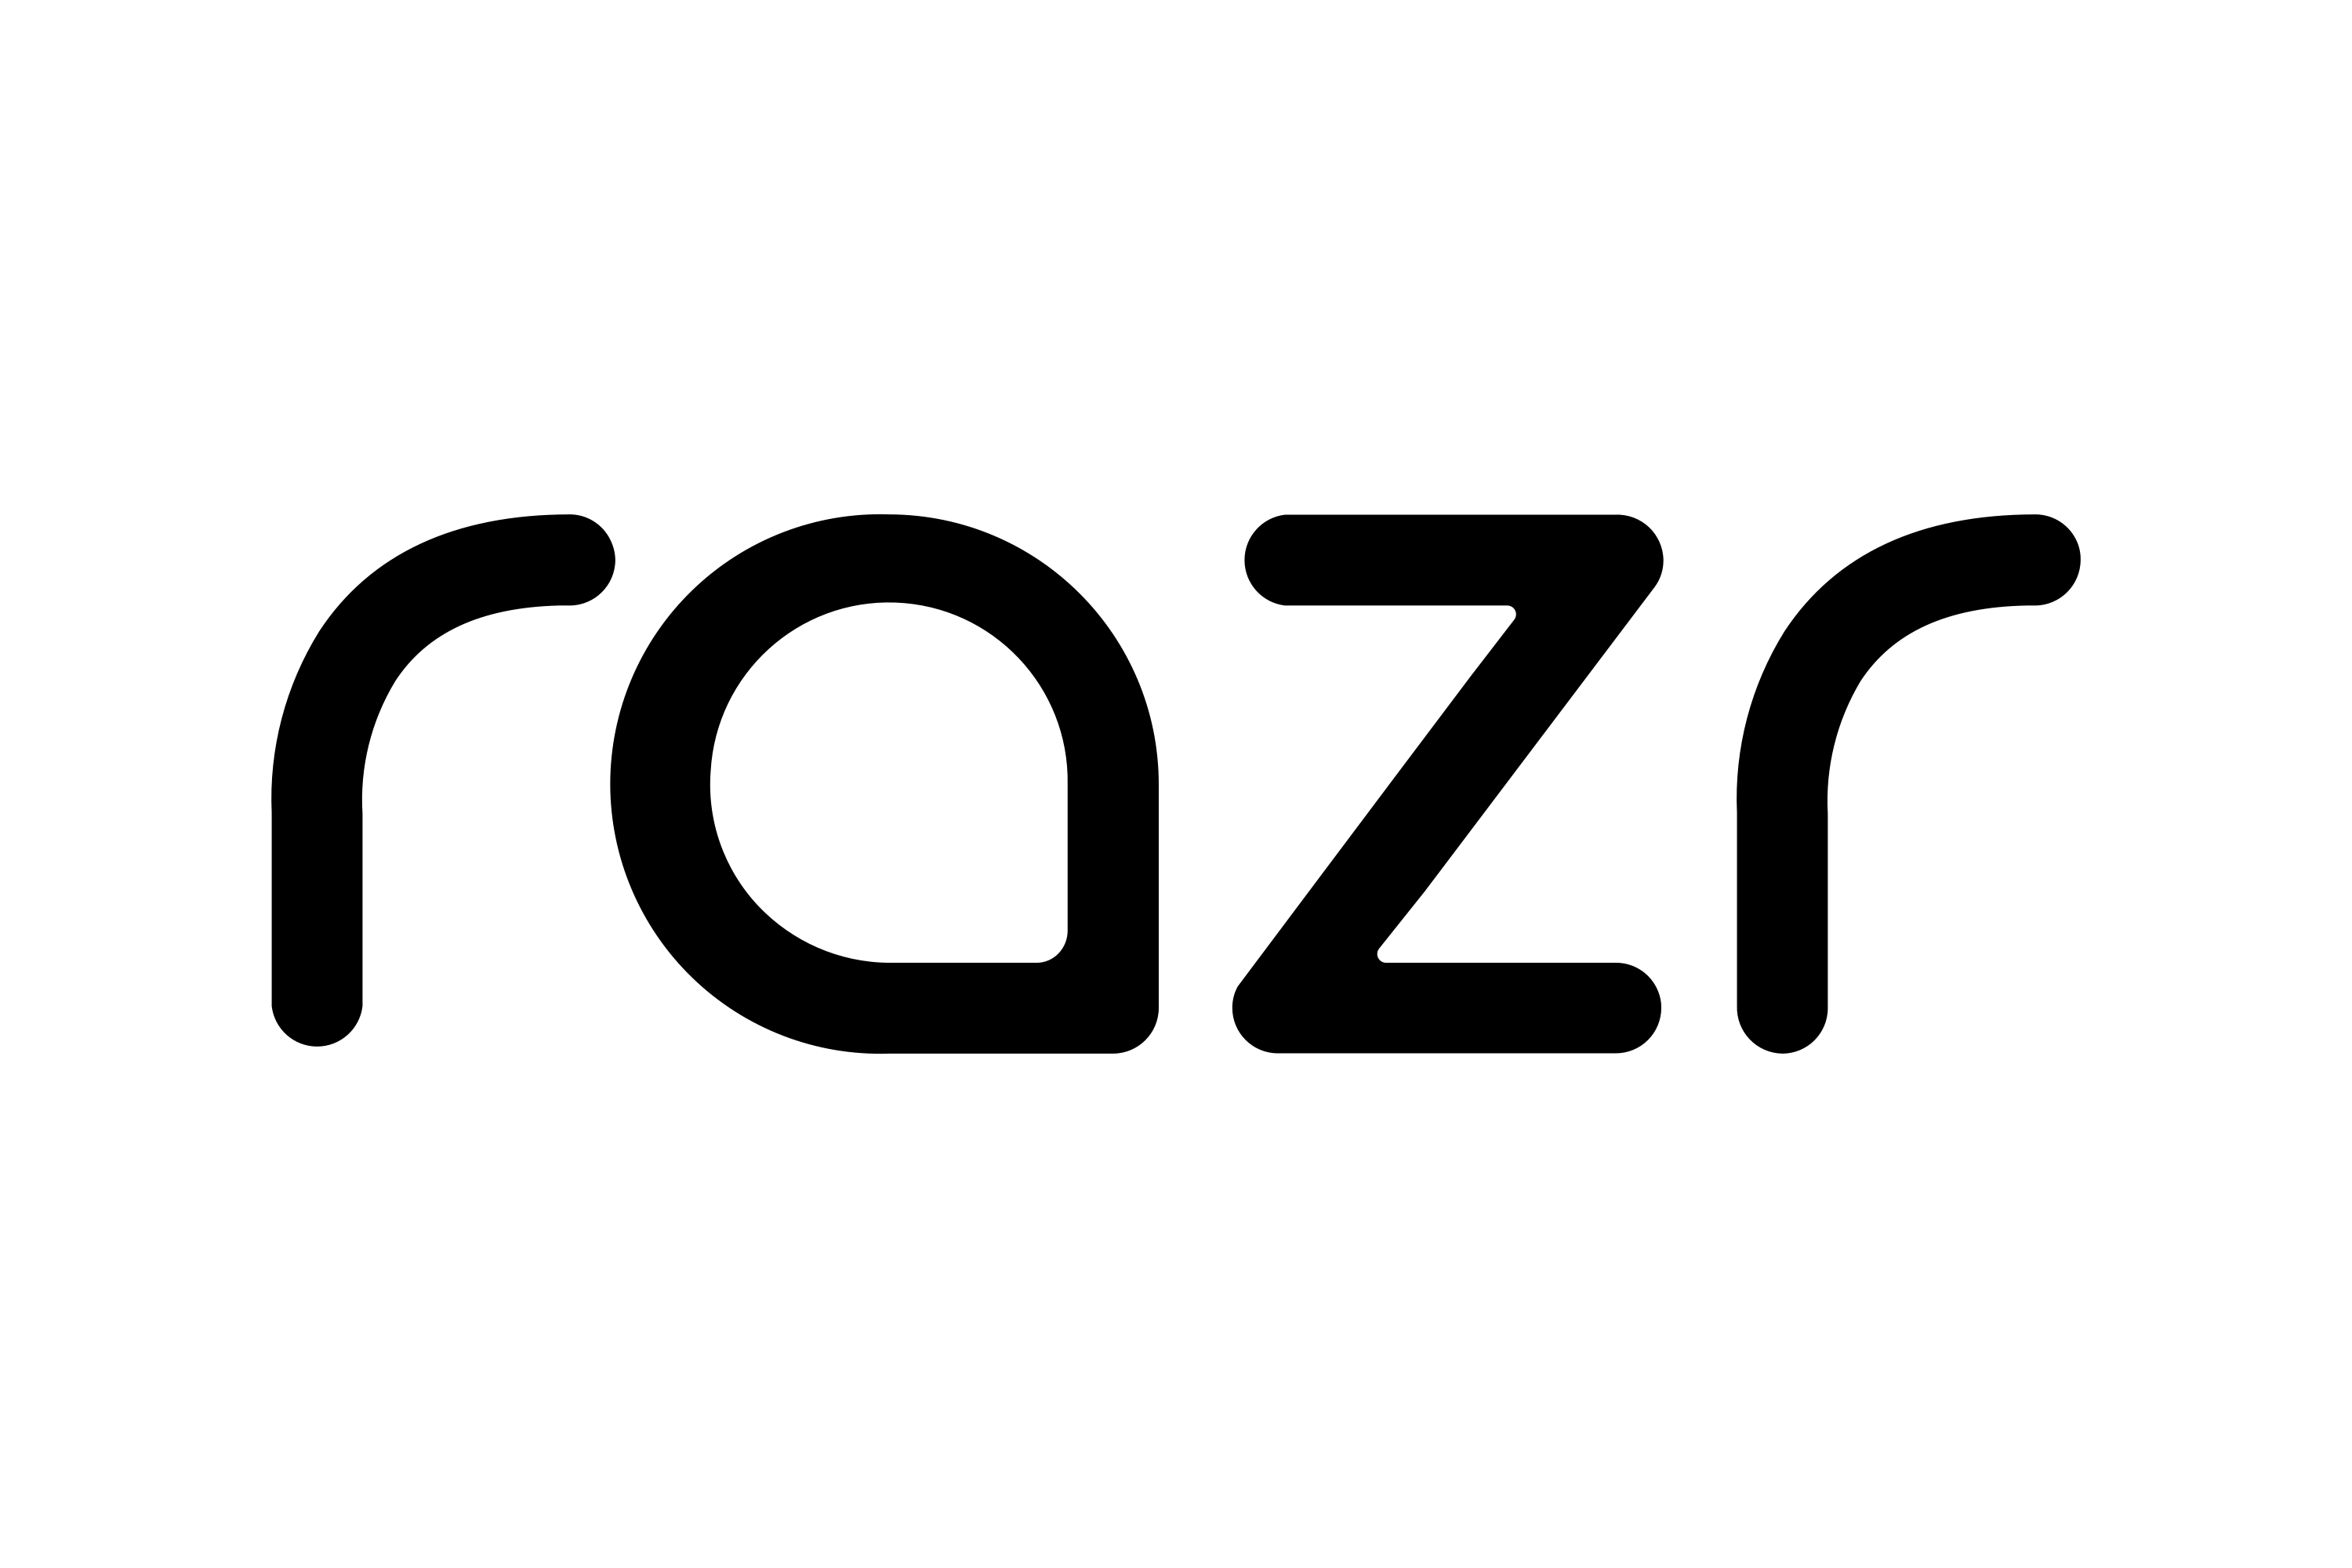 Download Motorola Razr Logo in SVG Vector or PNG File Format - Logo.wine